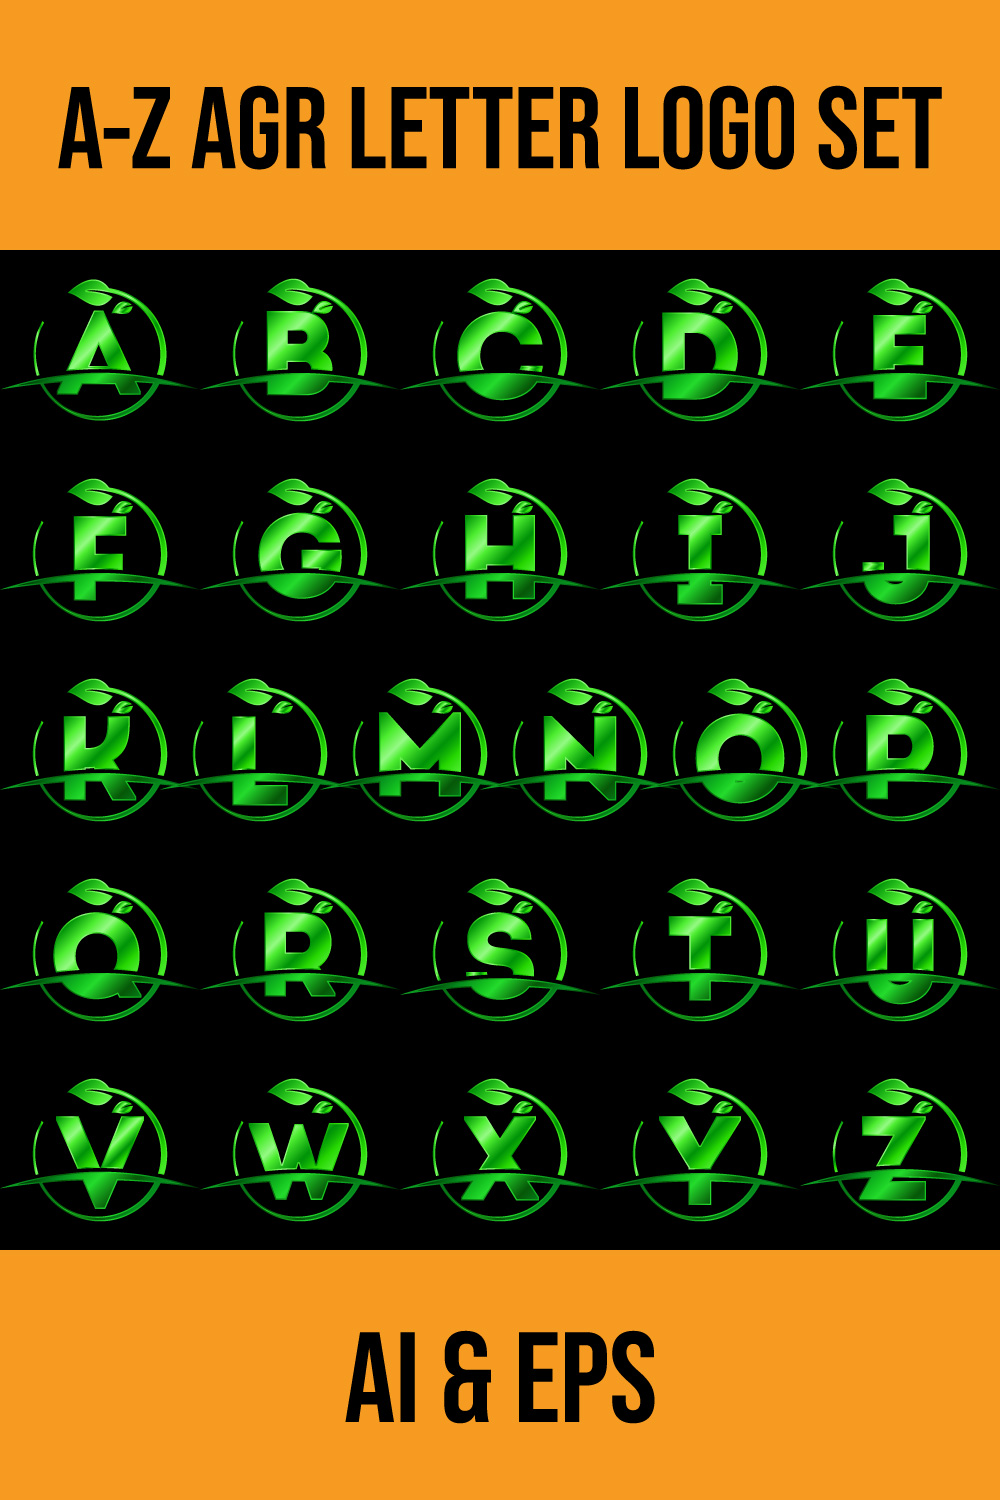 Initial A-Z monogram alphabet with circle leaf and swoosh Eco-friendly logo concept Font emblem pinterest preview image.